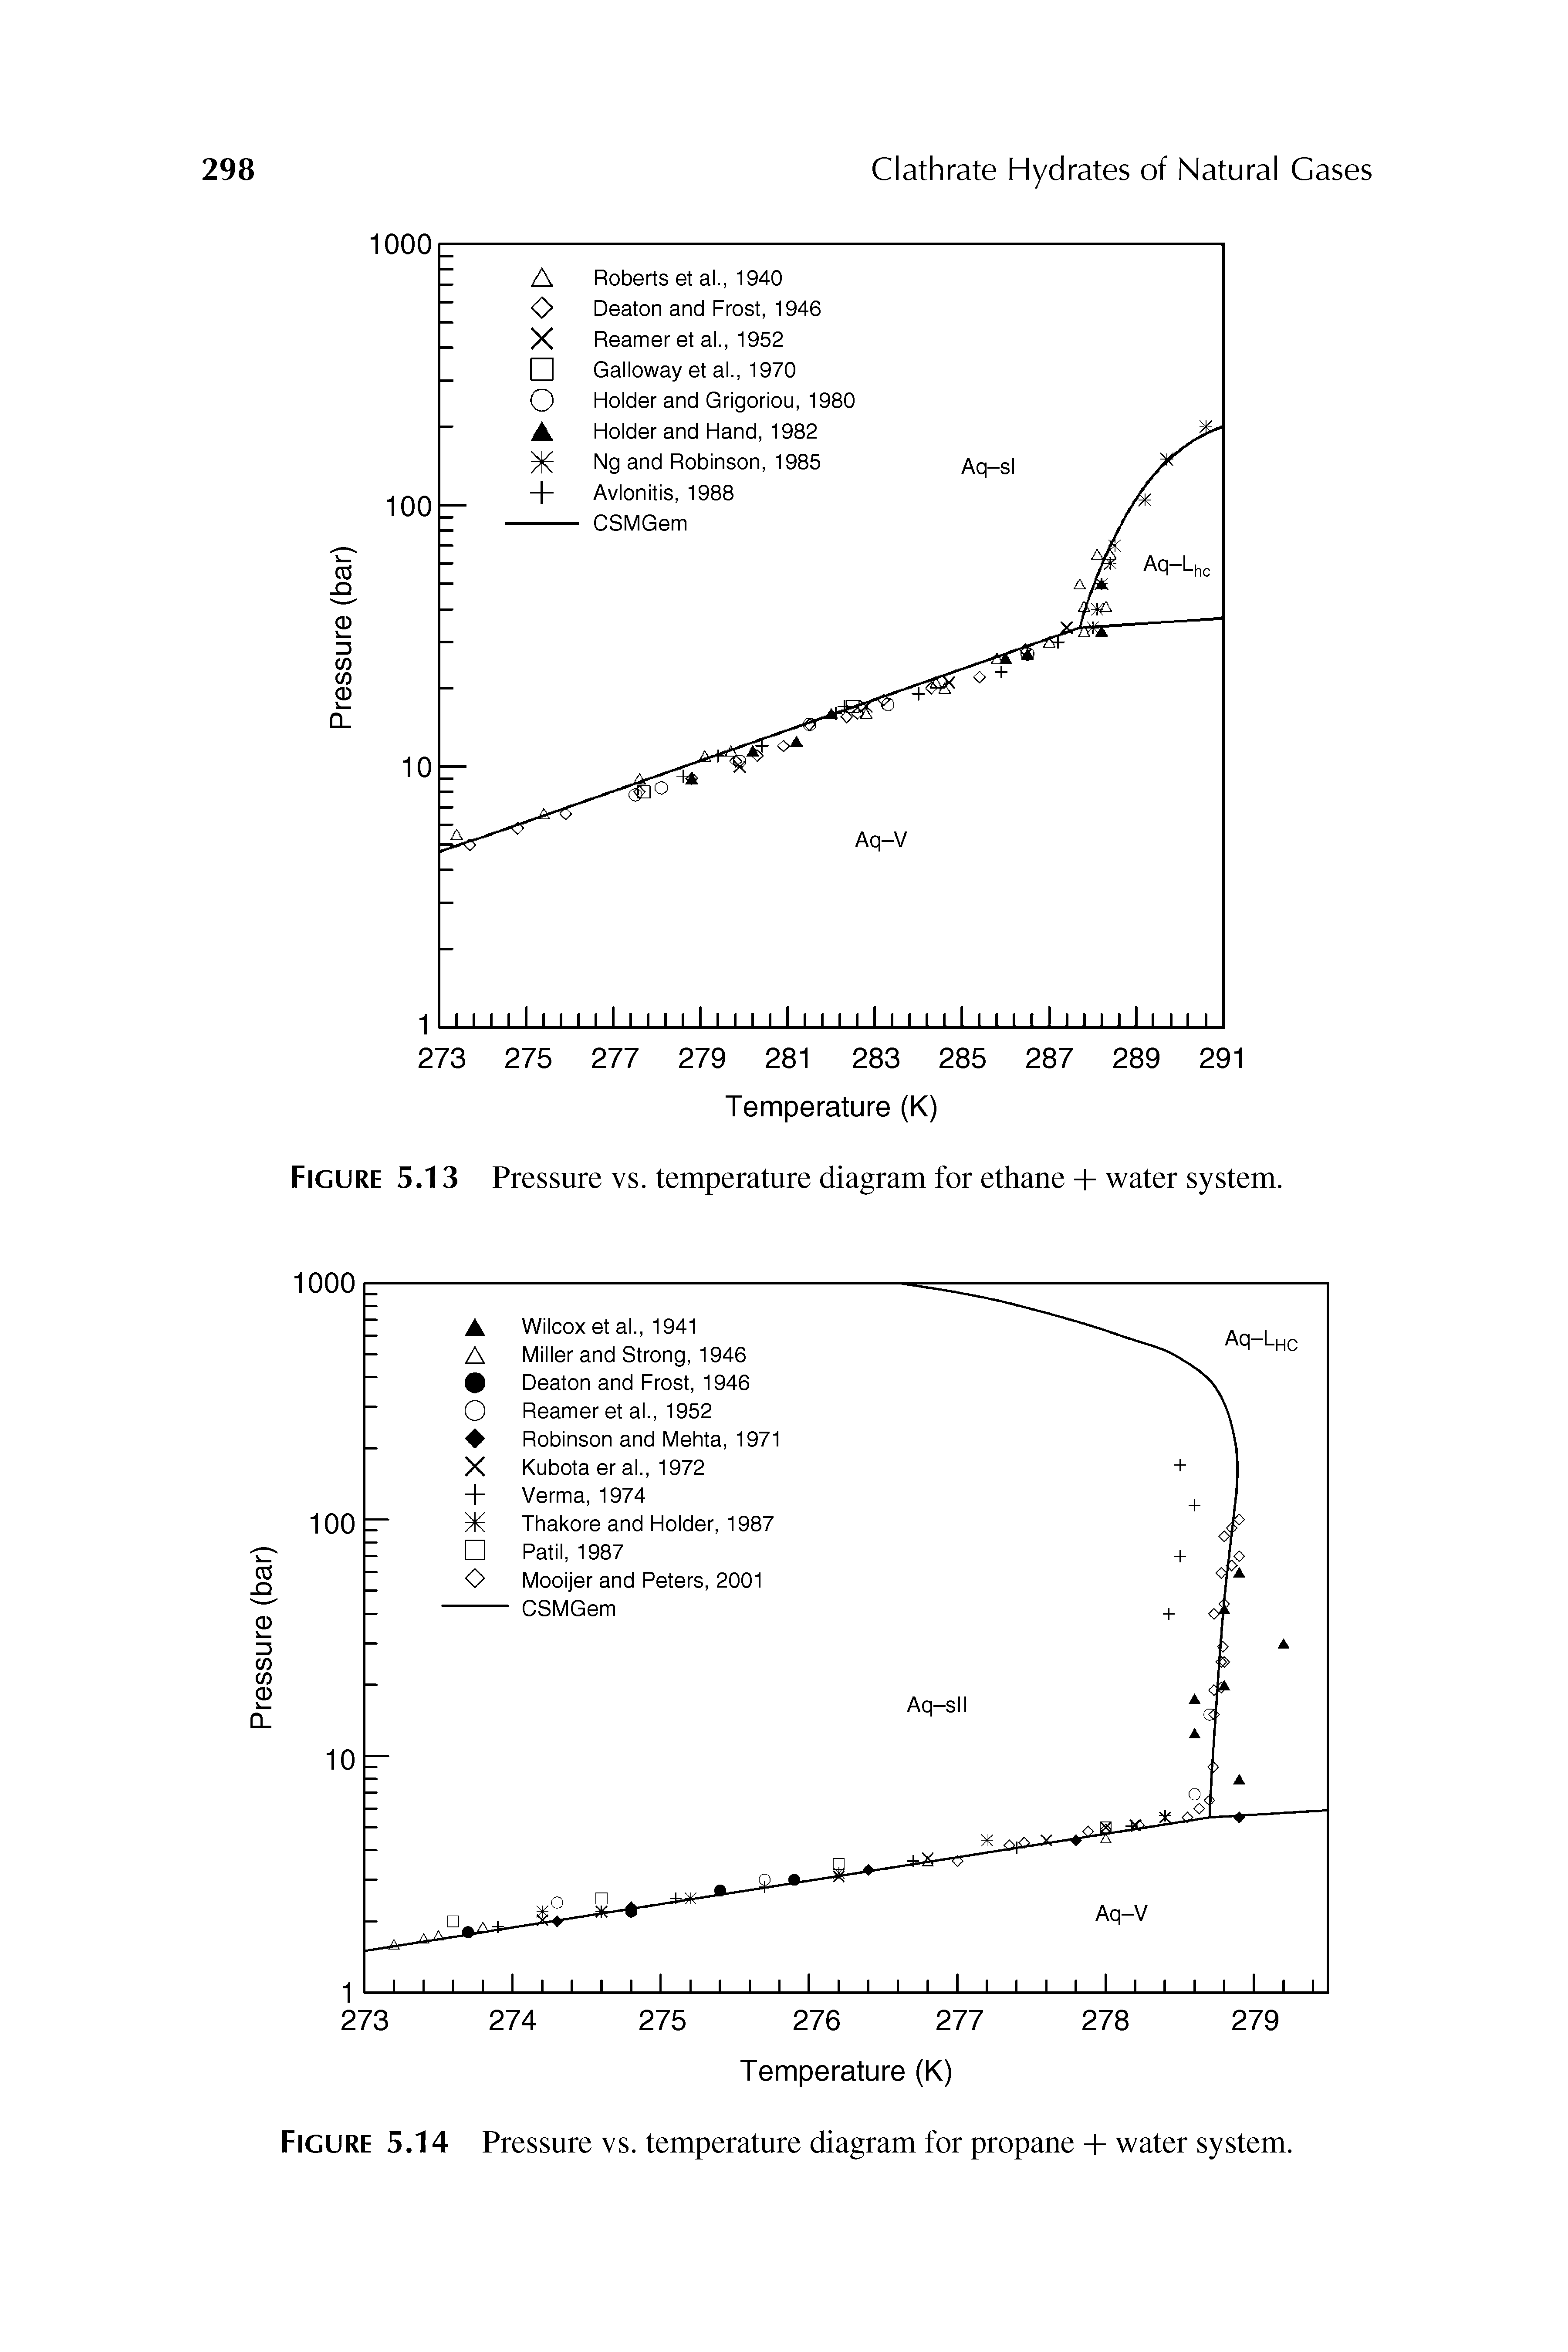 Figure 5.14 Pressure vs. temperature diagram for propane + water system.